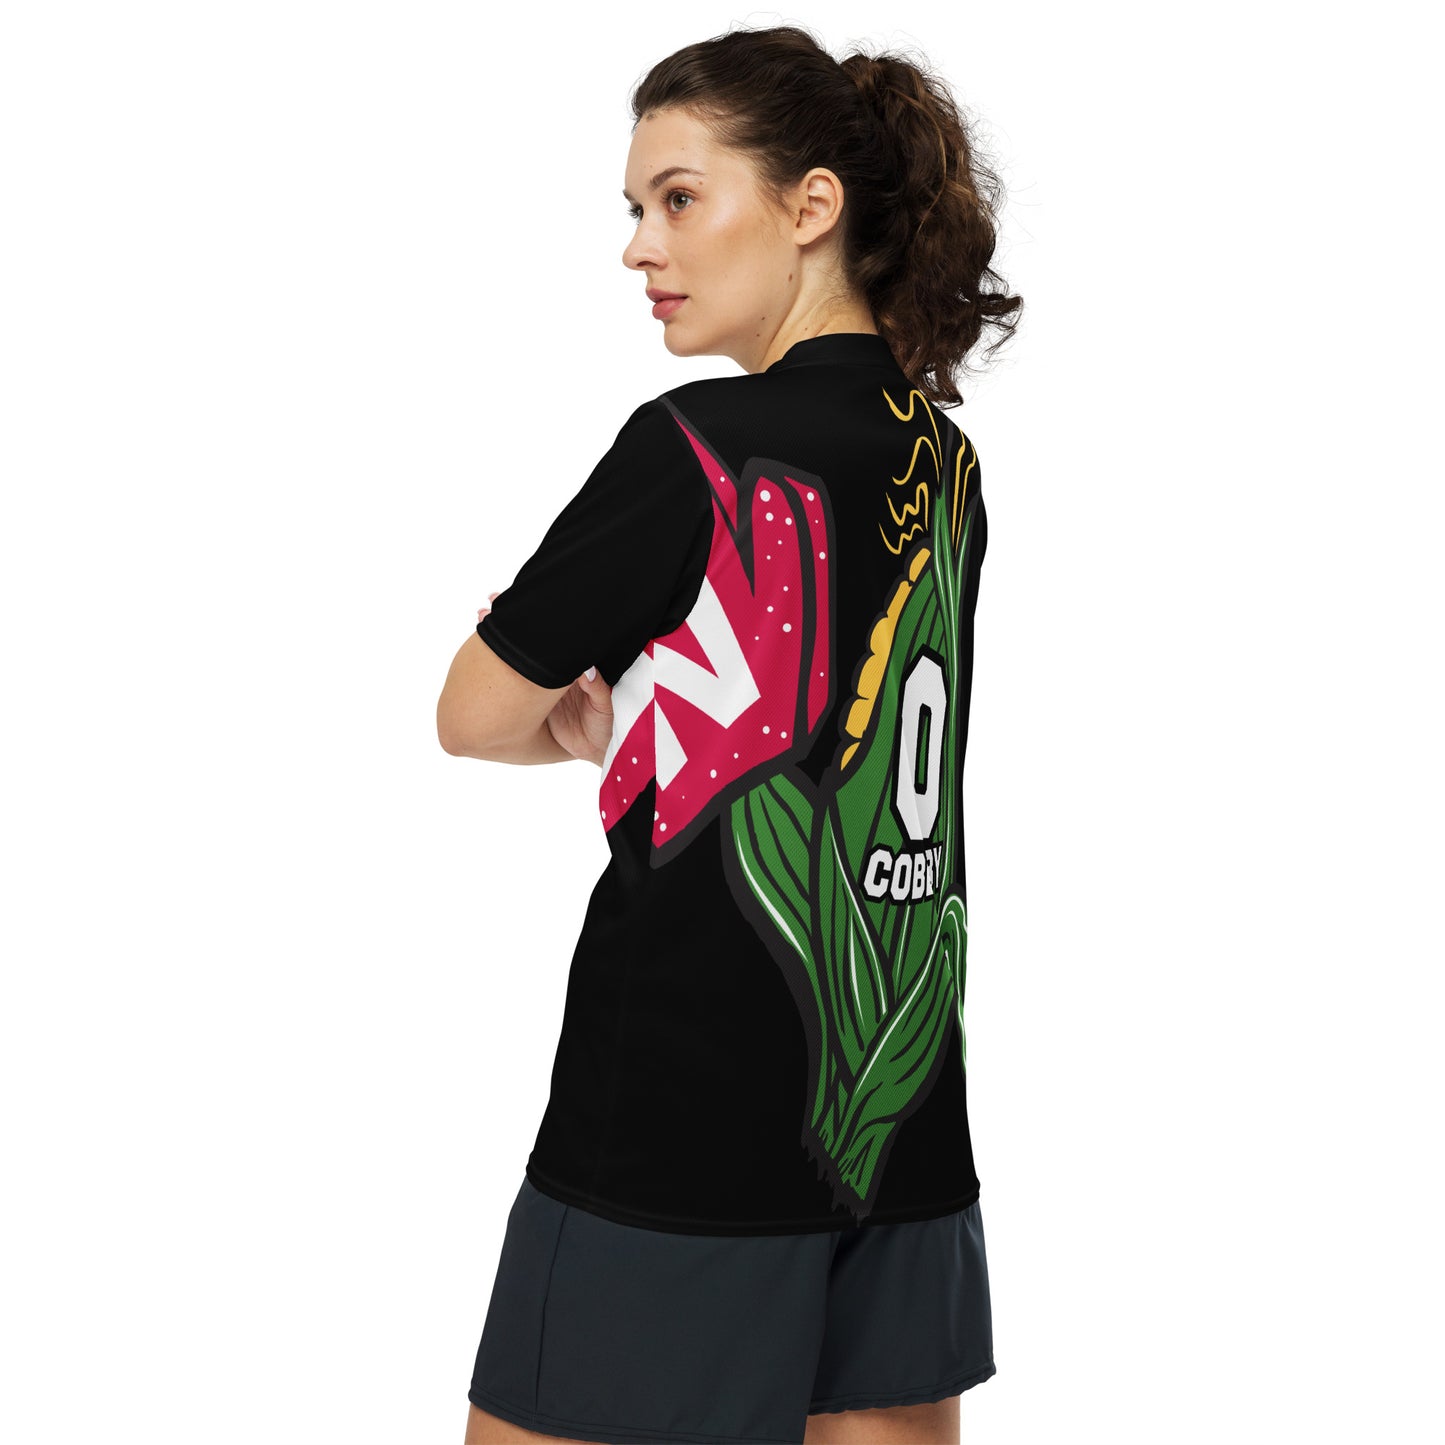 Unisex sports jersey w/Cobby - Black